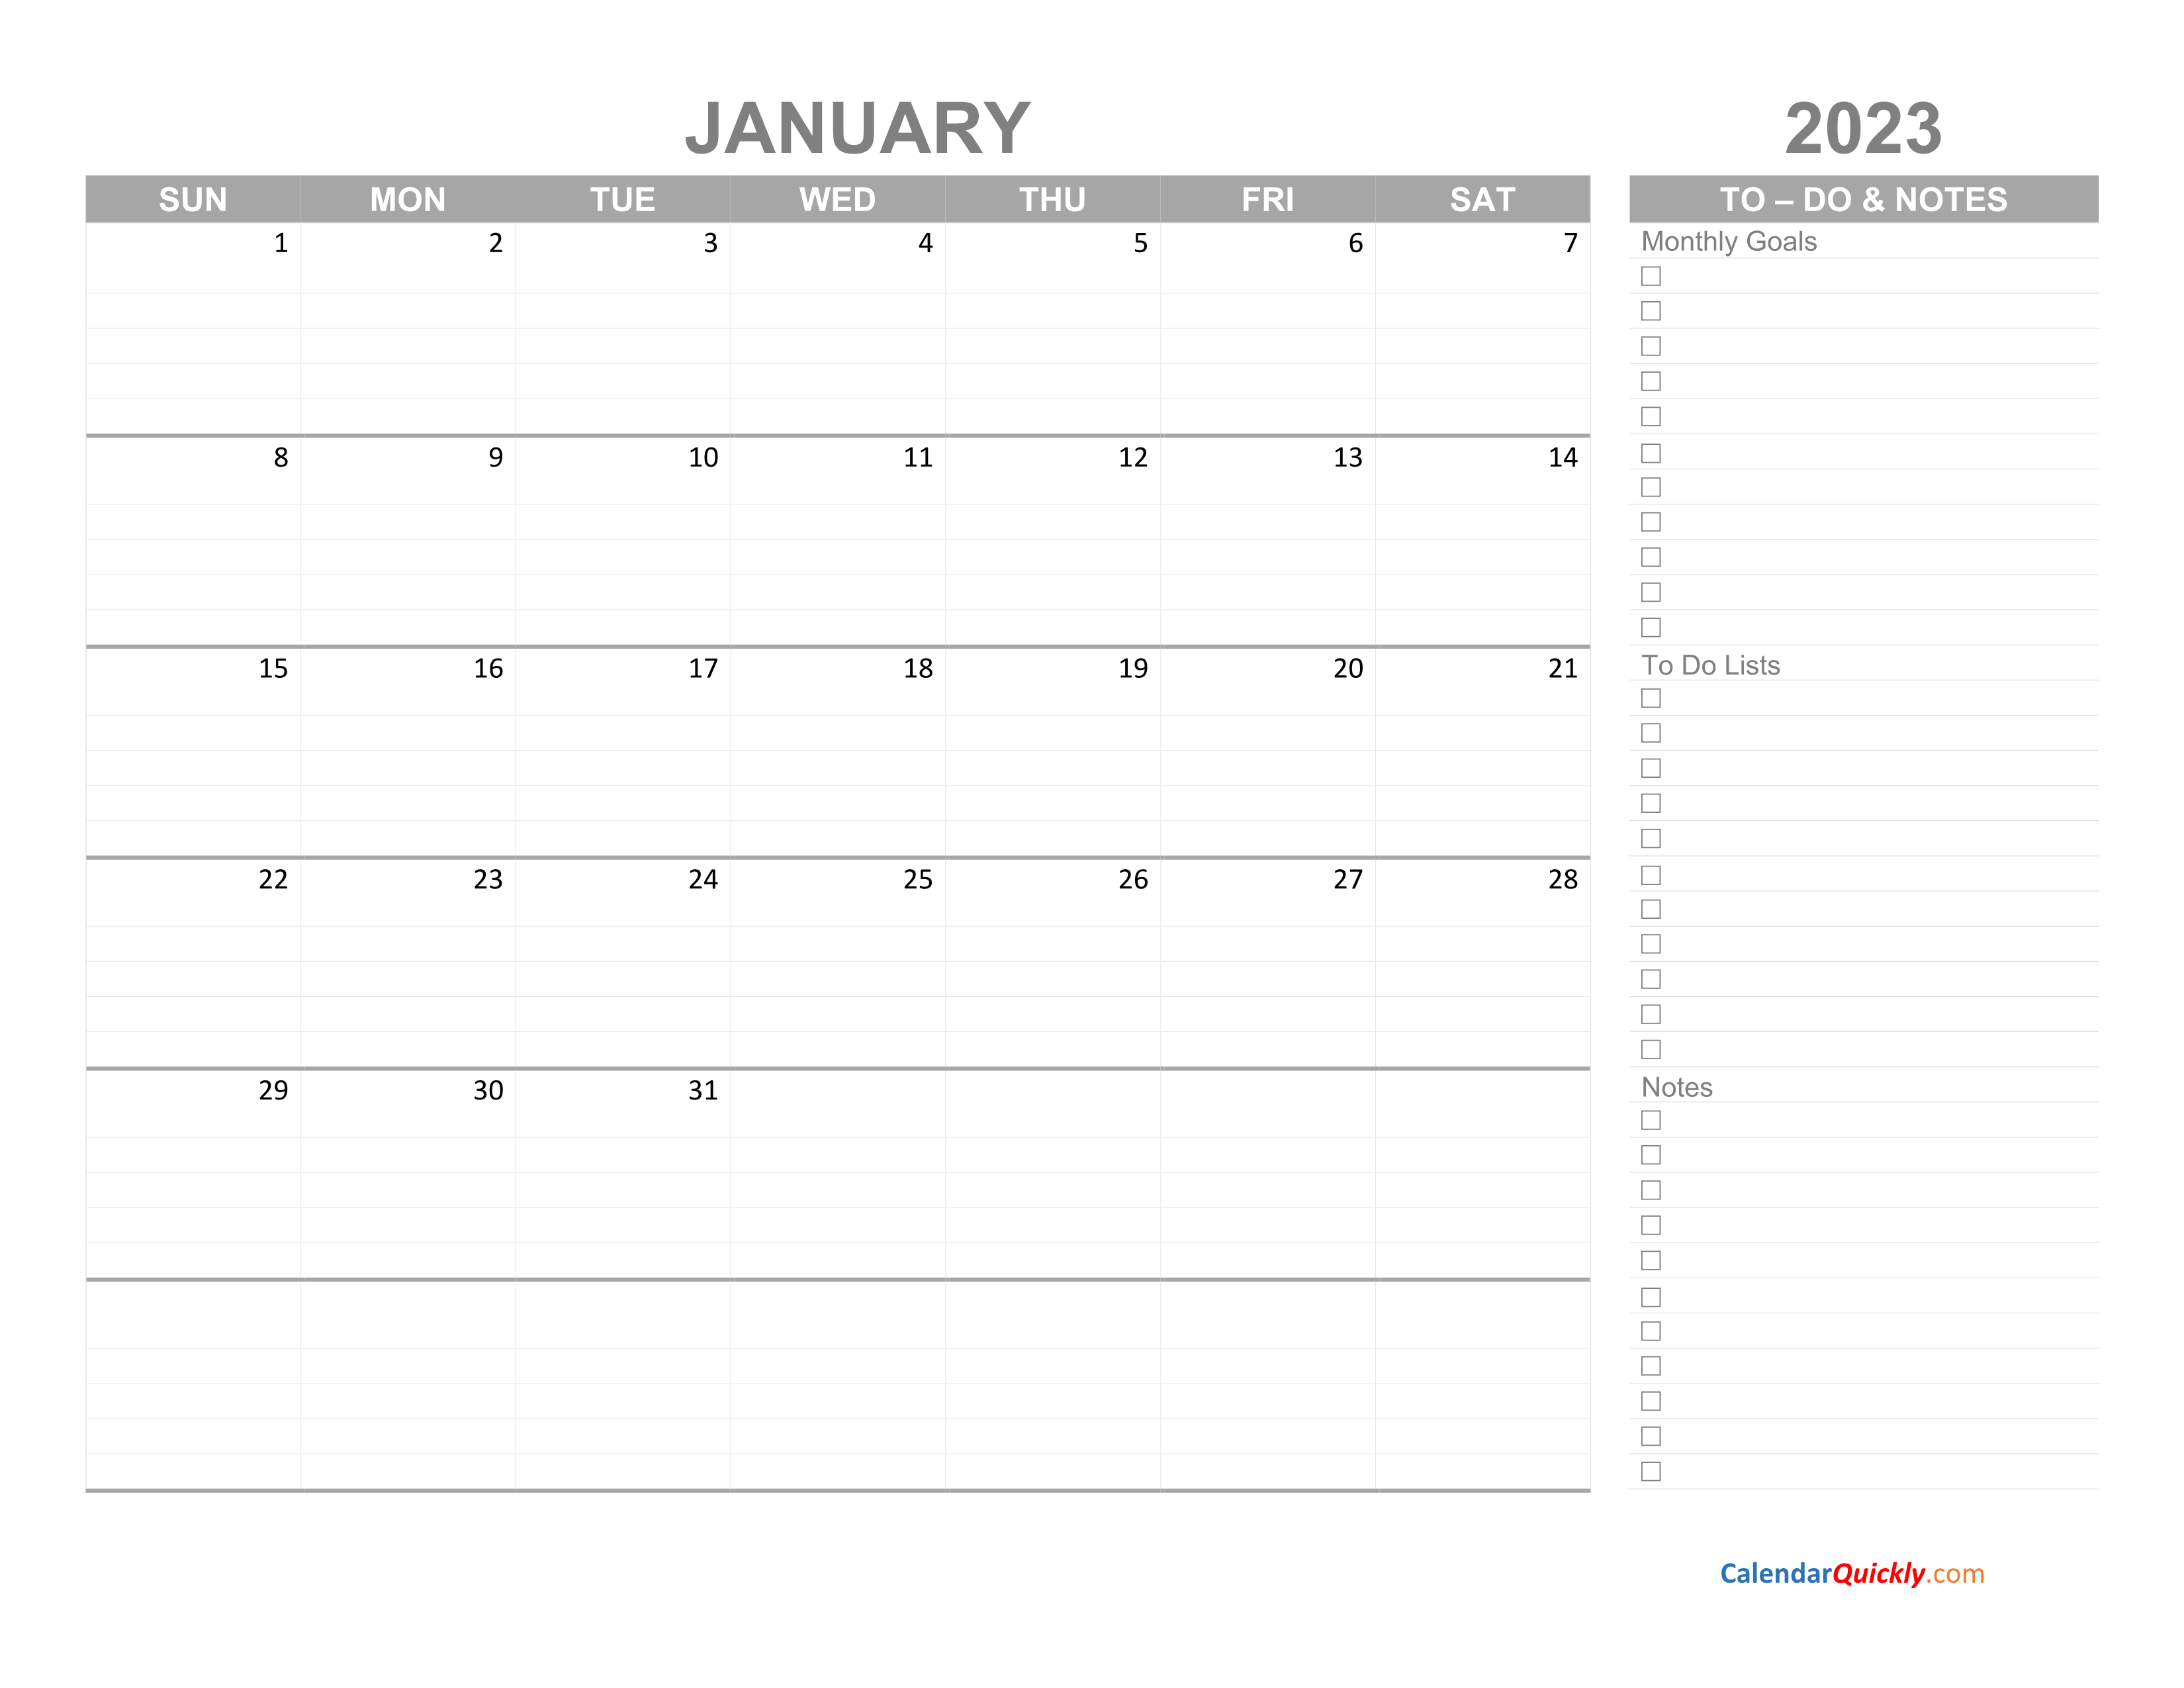 January 2023 Calendar With To Do List Calendar Quickly